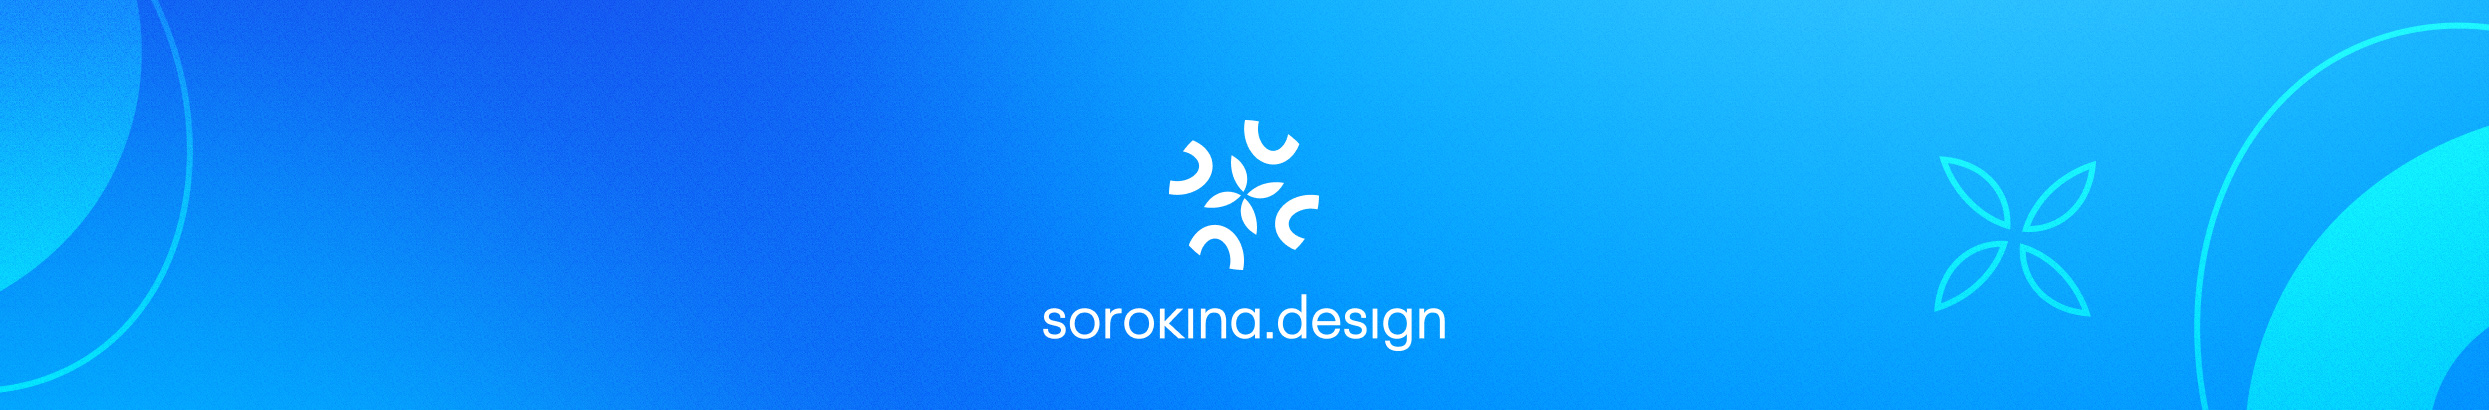 Banner de perfil de Anya Sorokina